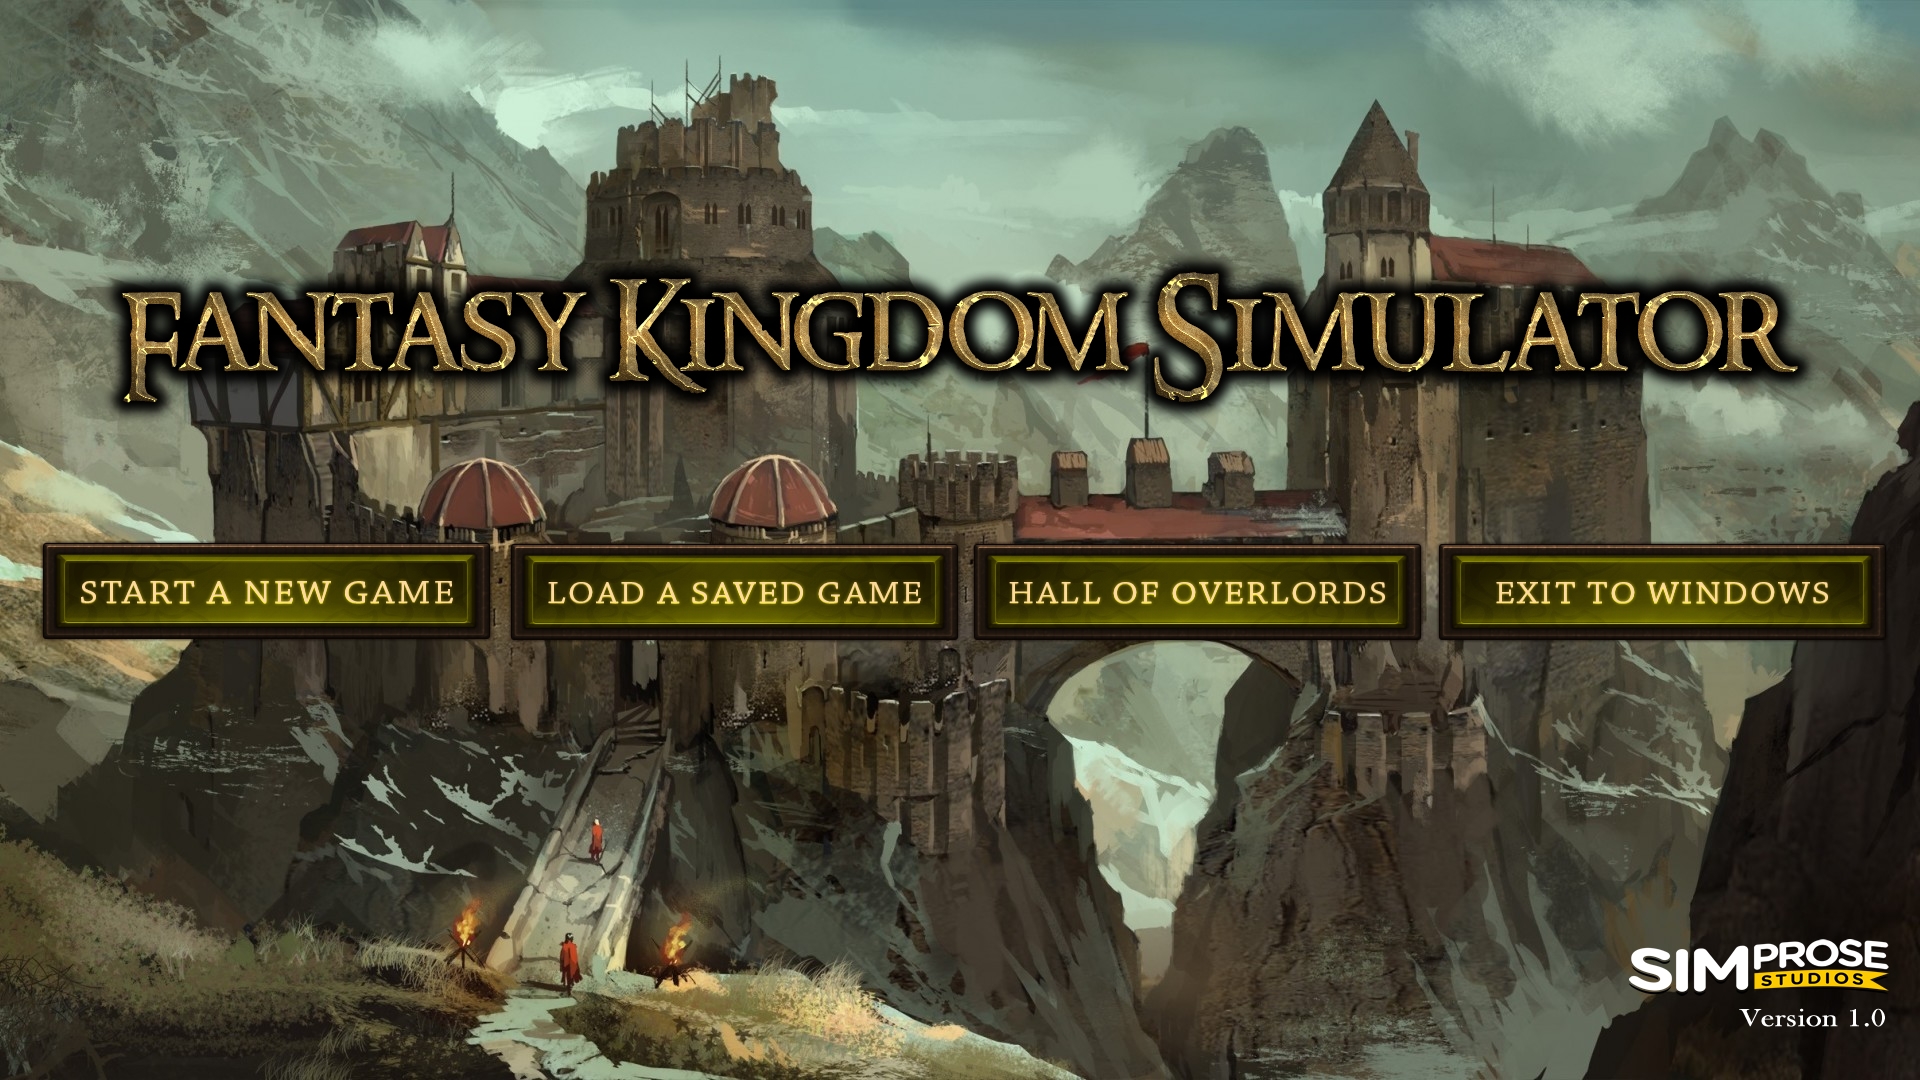 Fantasy Kingdom Simulator English Language only Steam CD Key, 0.33 usd